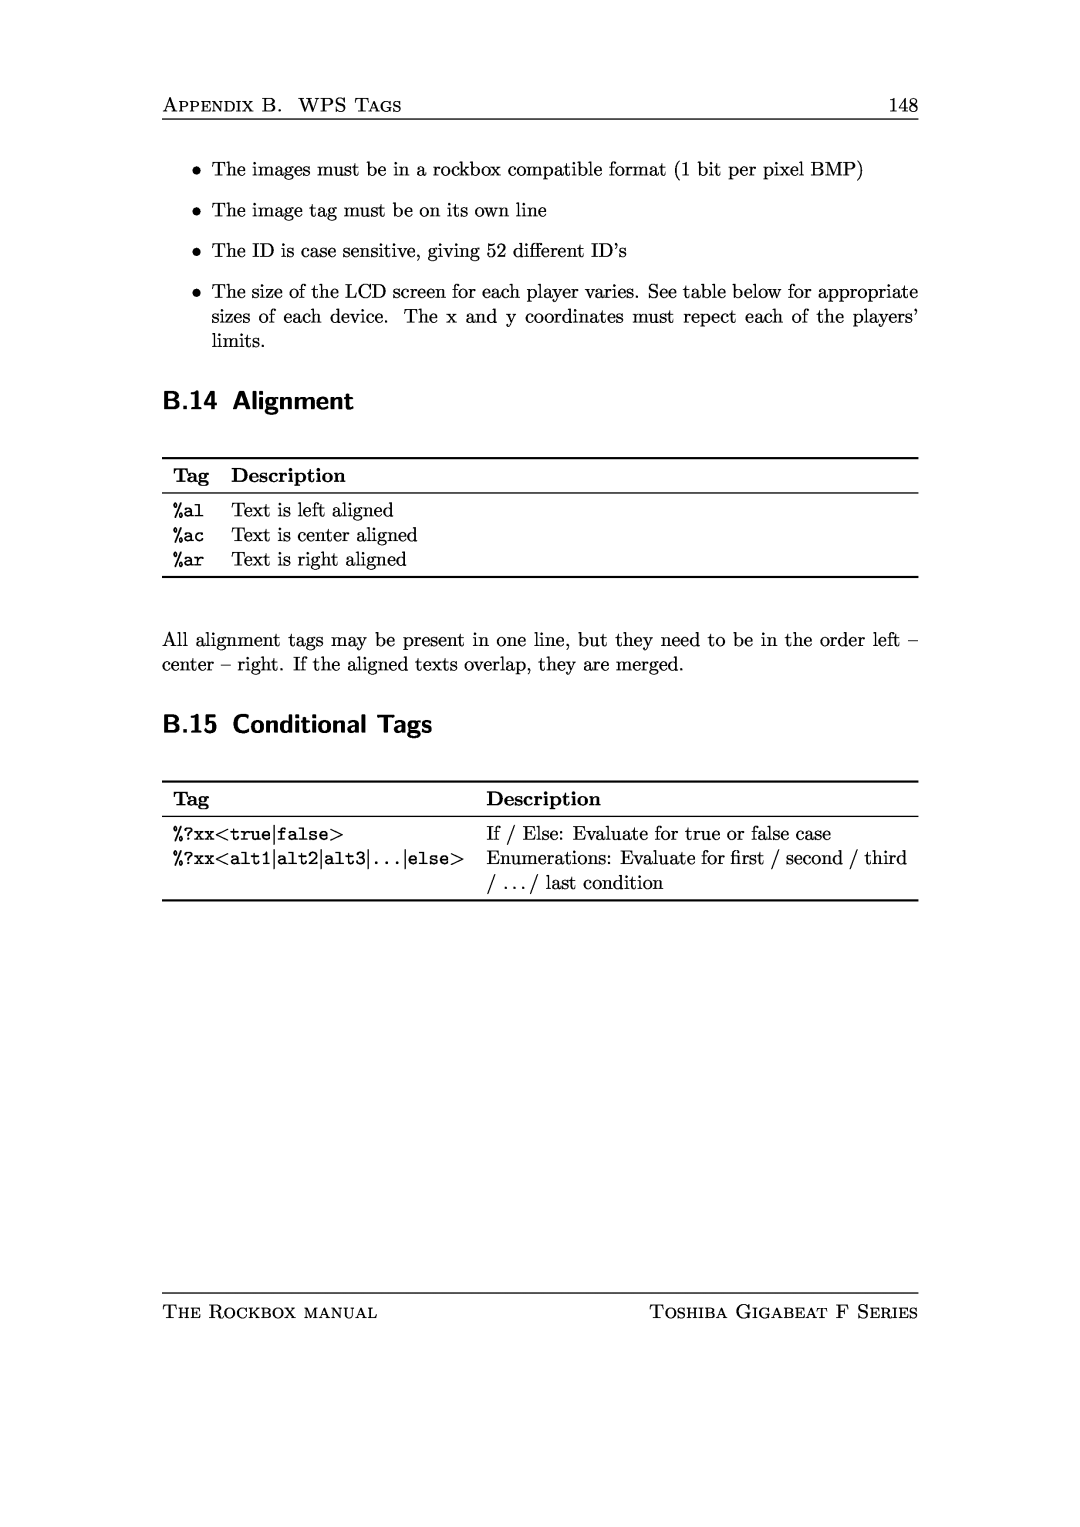 Toshiba F Series manual B.14 Alignment, B.15 Conditional Tags 